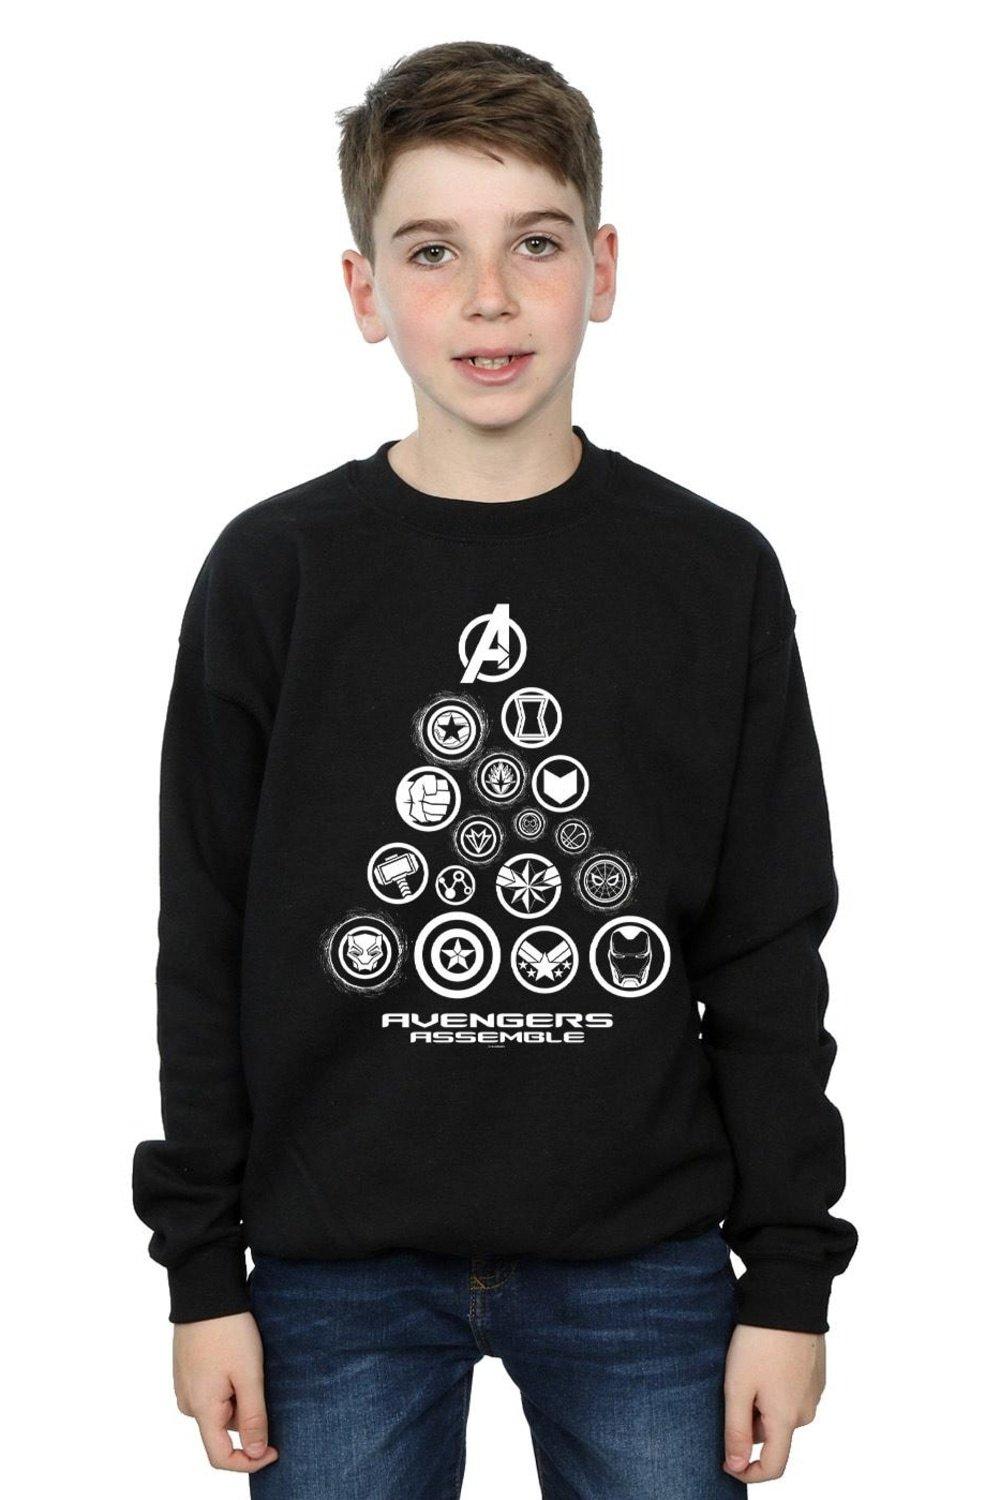 Avengers Endgame Pyramid Icons Sweatshirt